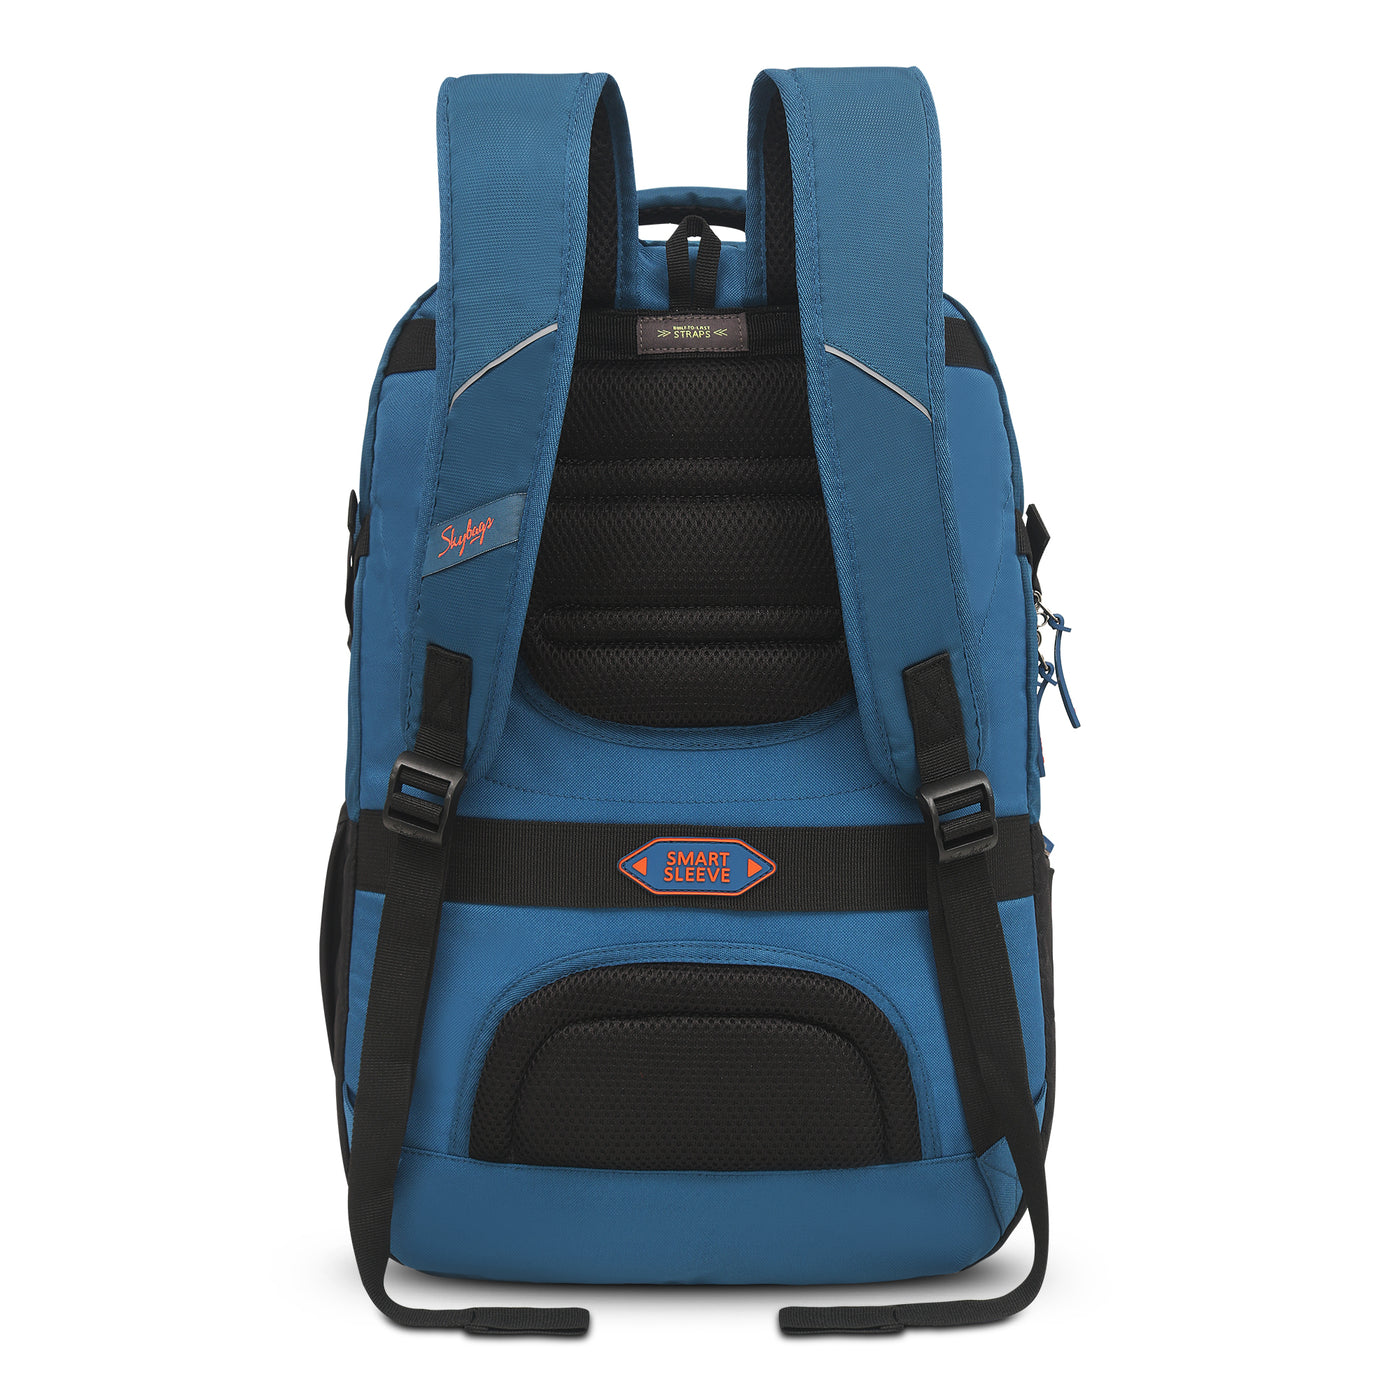 Skybags XELIUS PRO 04 BLUE 